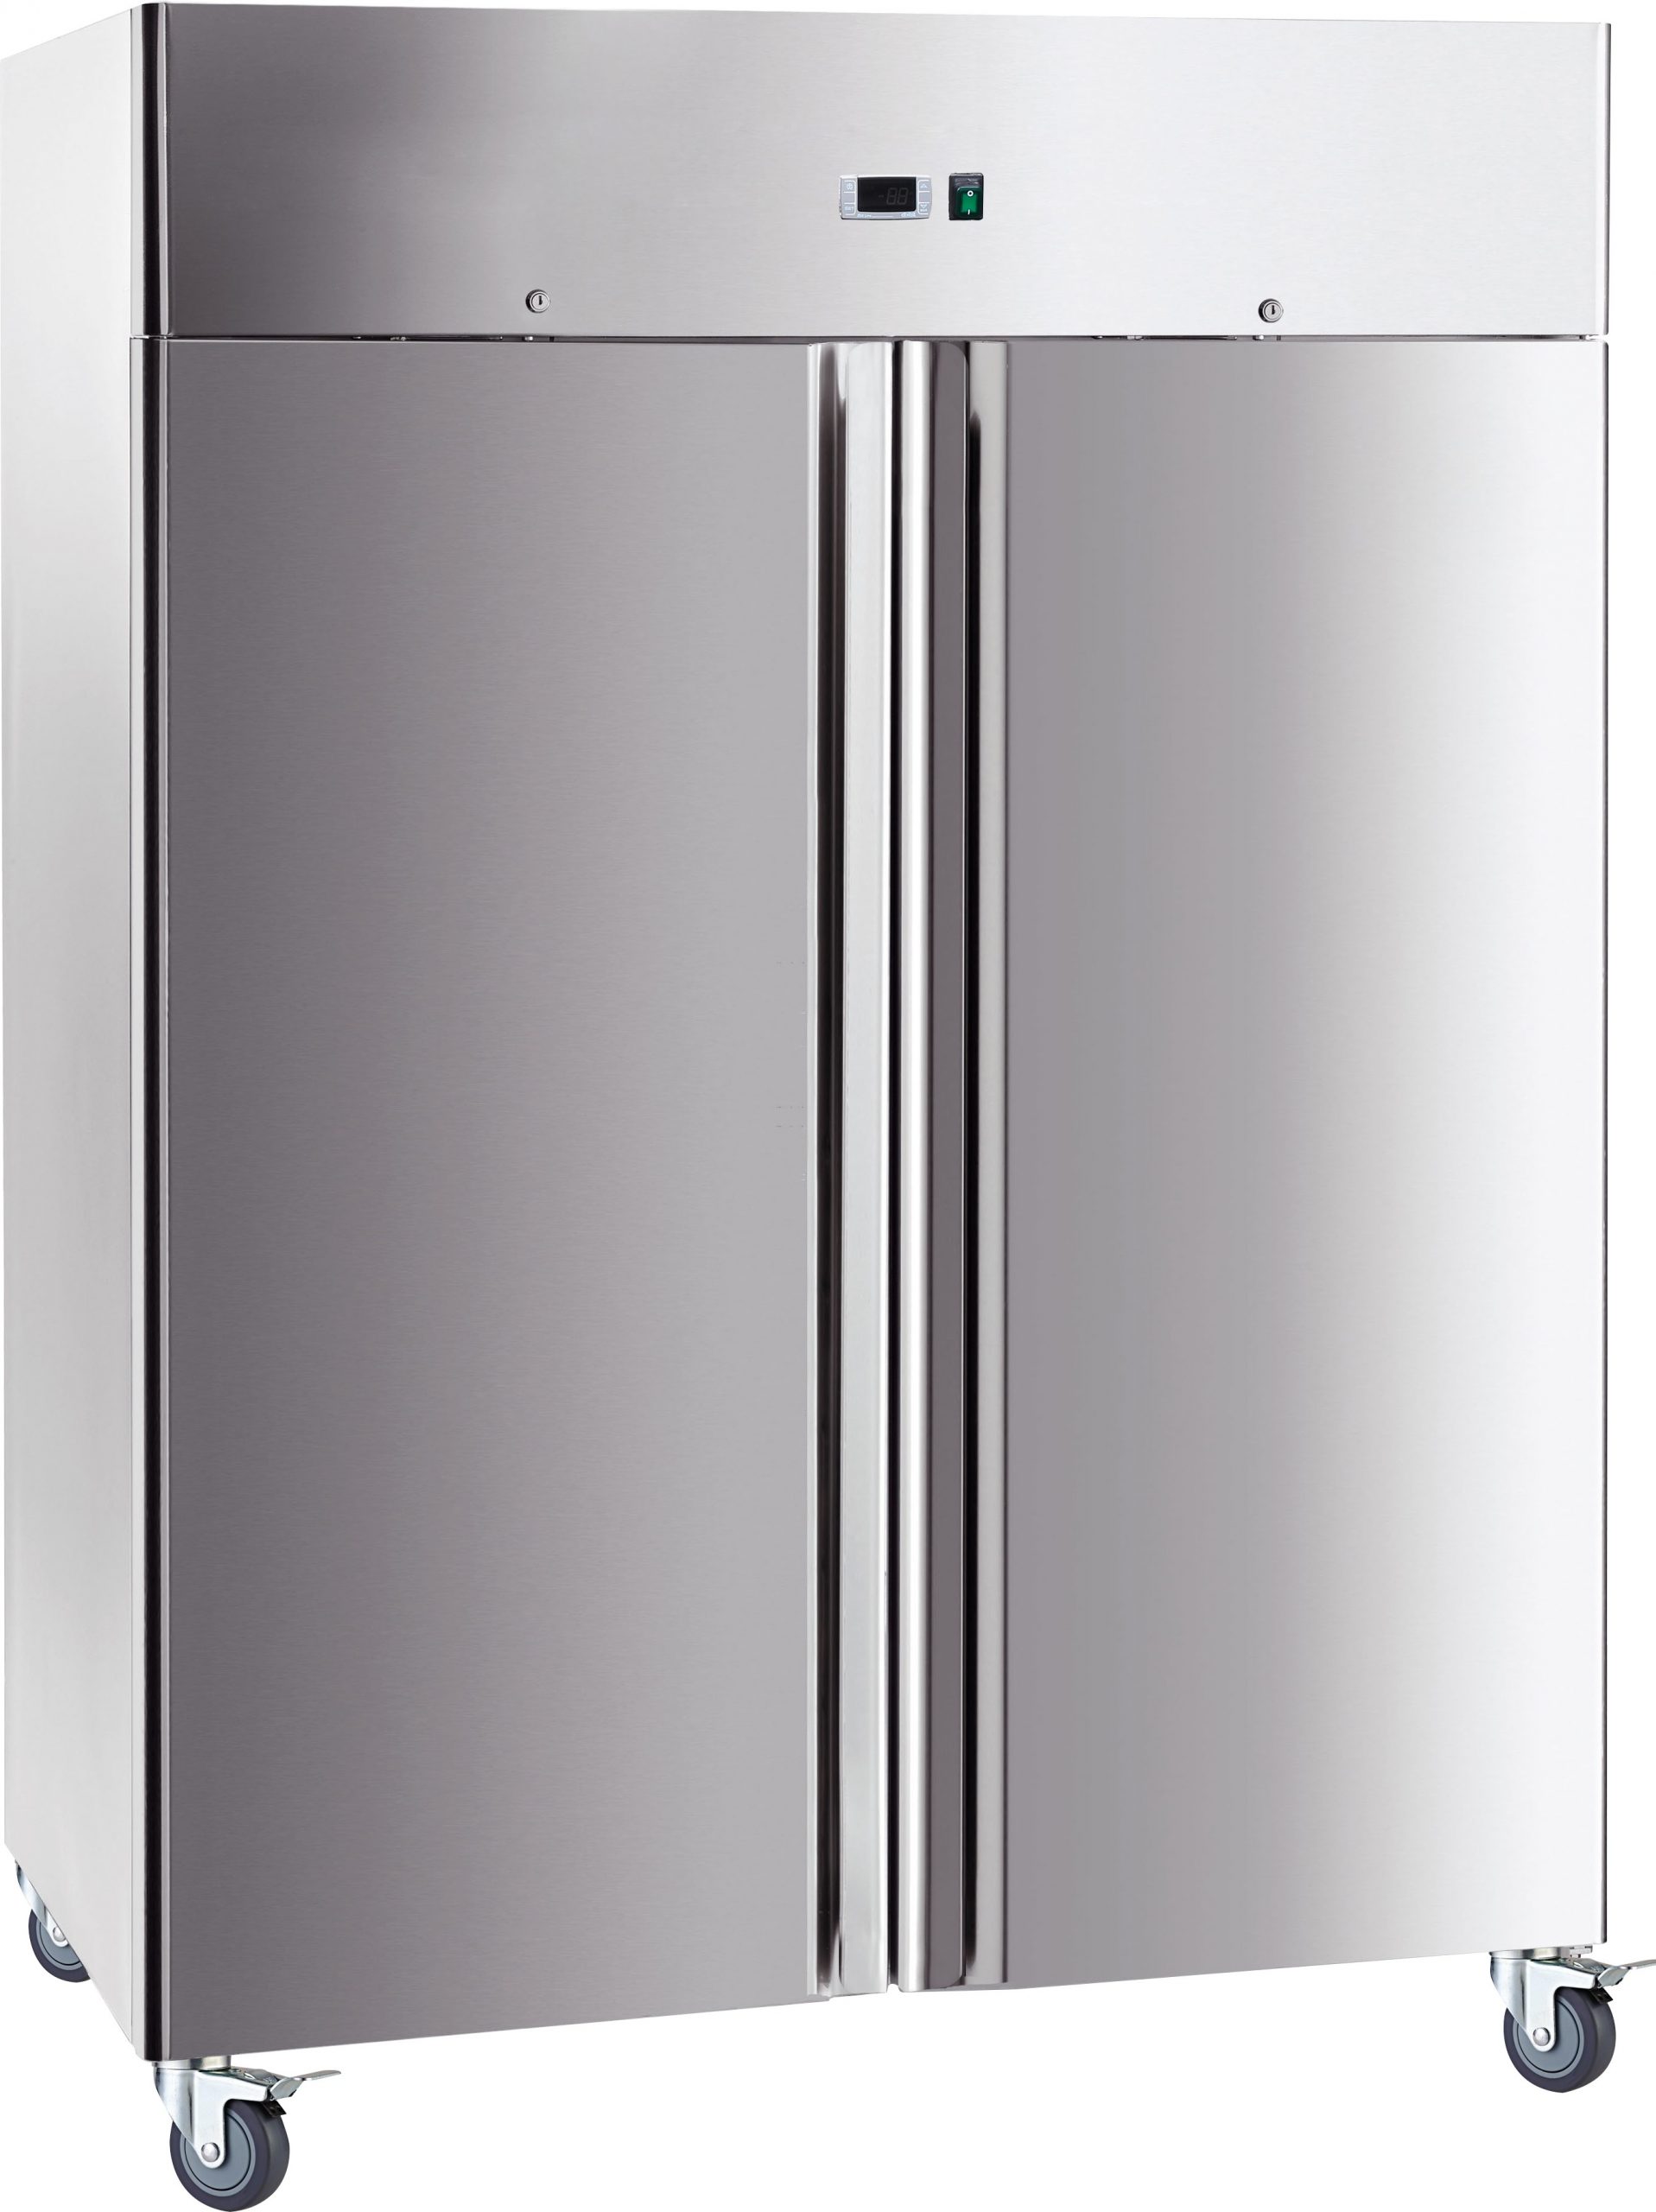 Bt 1400. Холодильный шкаф афинокс. Шкаф холодильный Afinox APX 300 TN. Sarnaran. Нерж холодильник 3-х местный Afinox PNG.